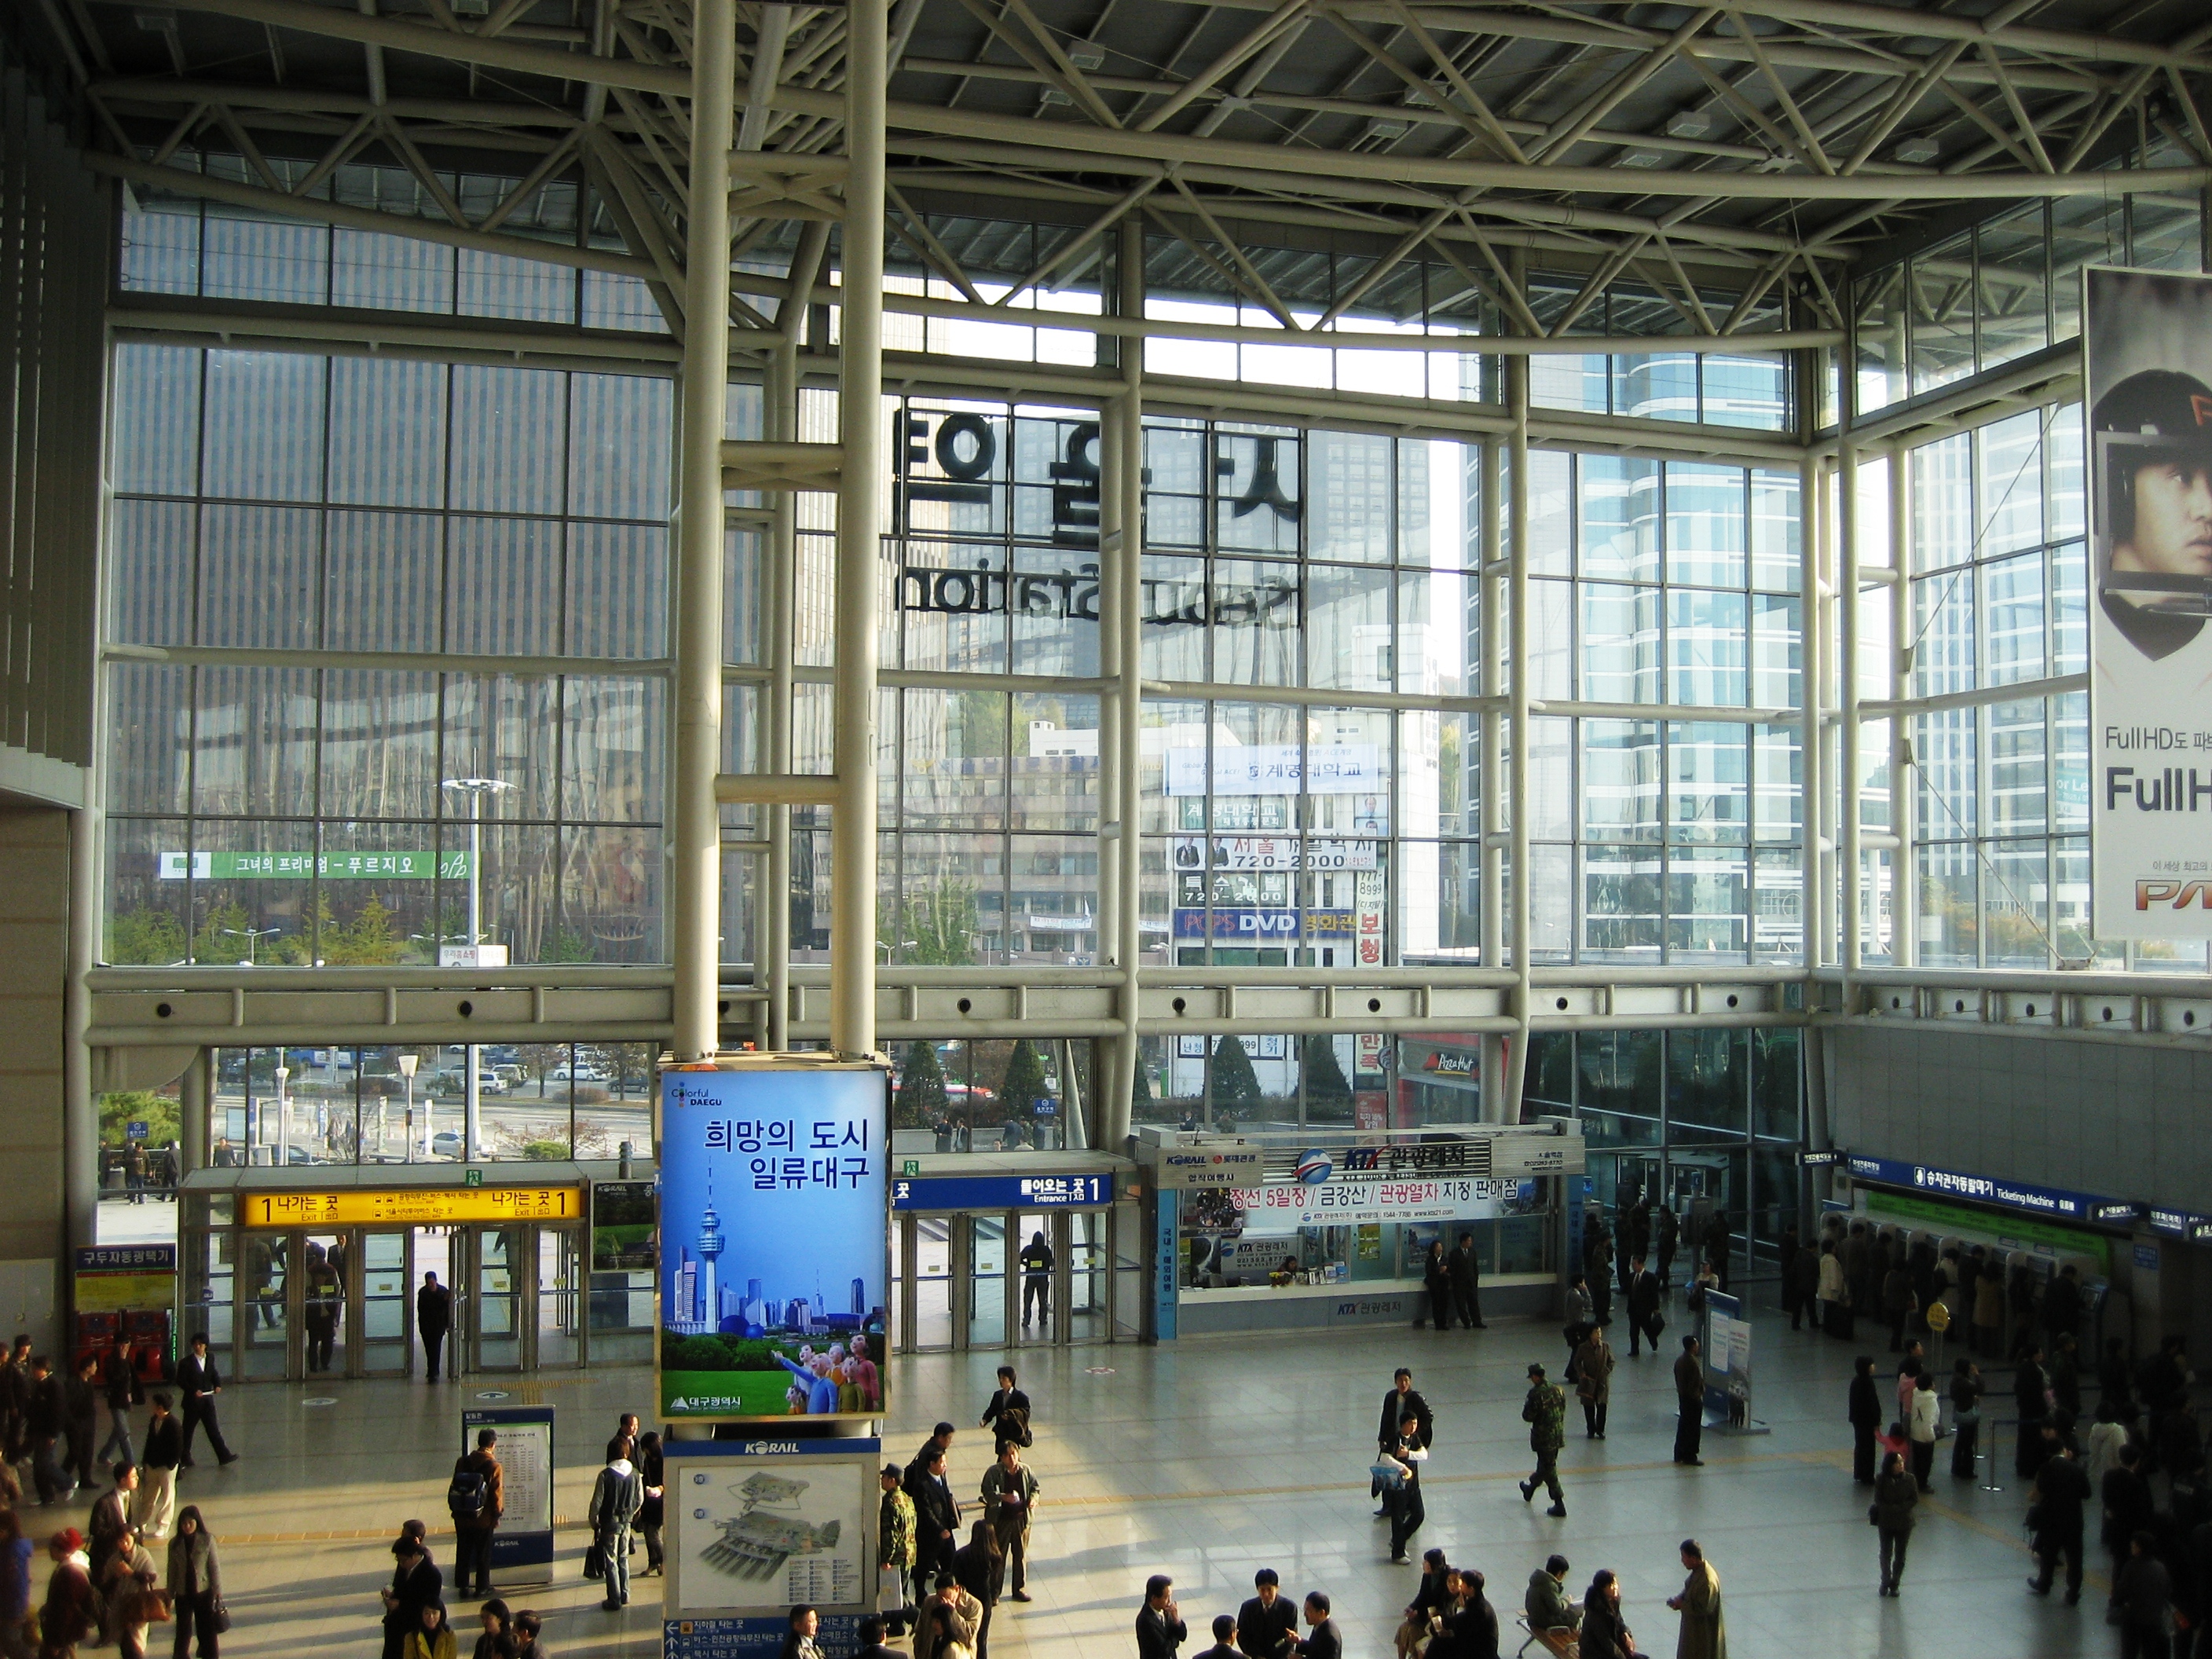 File:KNR-Seoul-Station-new-inside-view.JPG - Wikimedia Commons